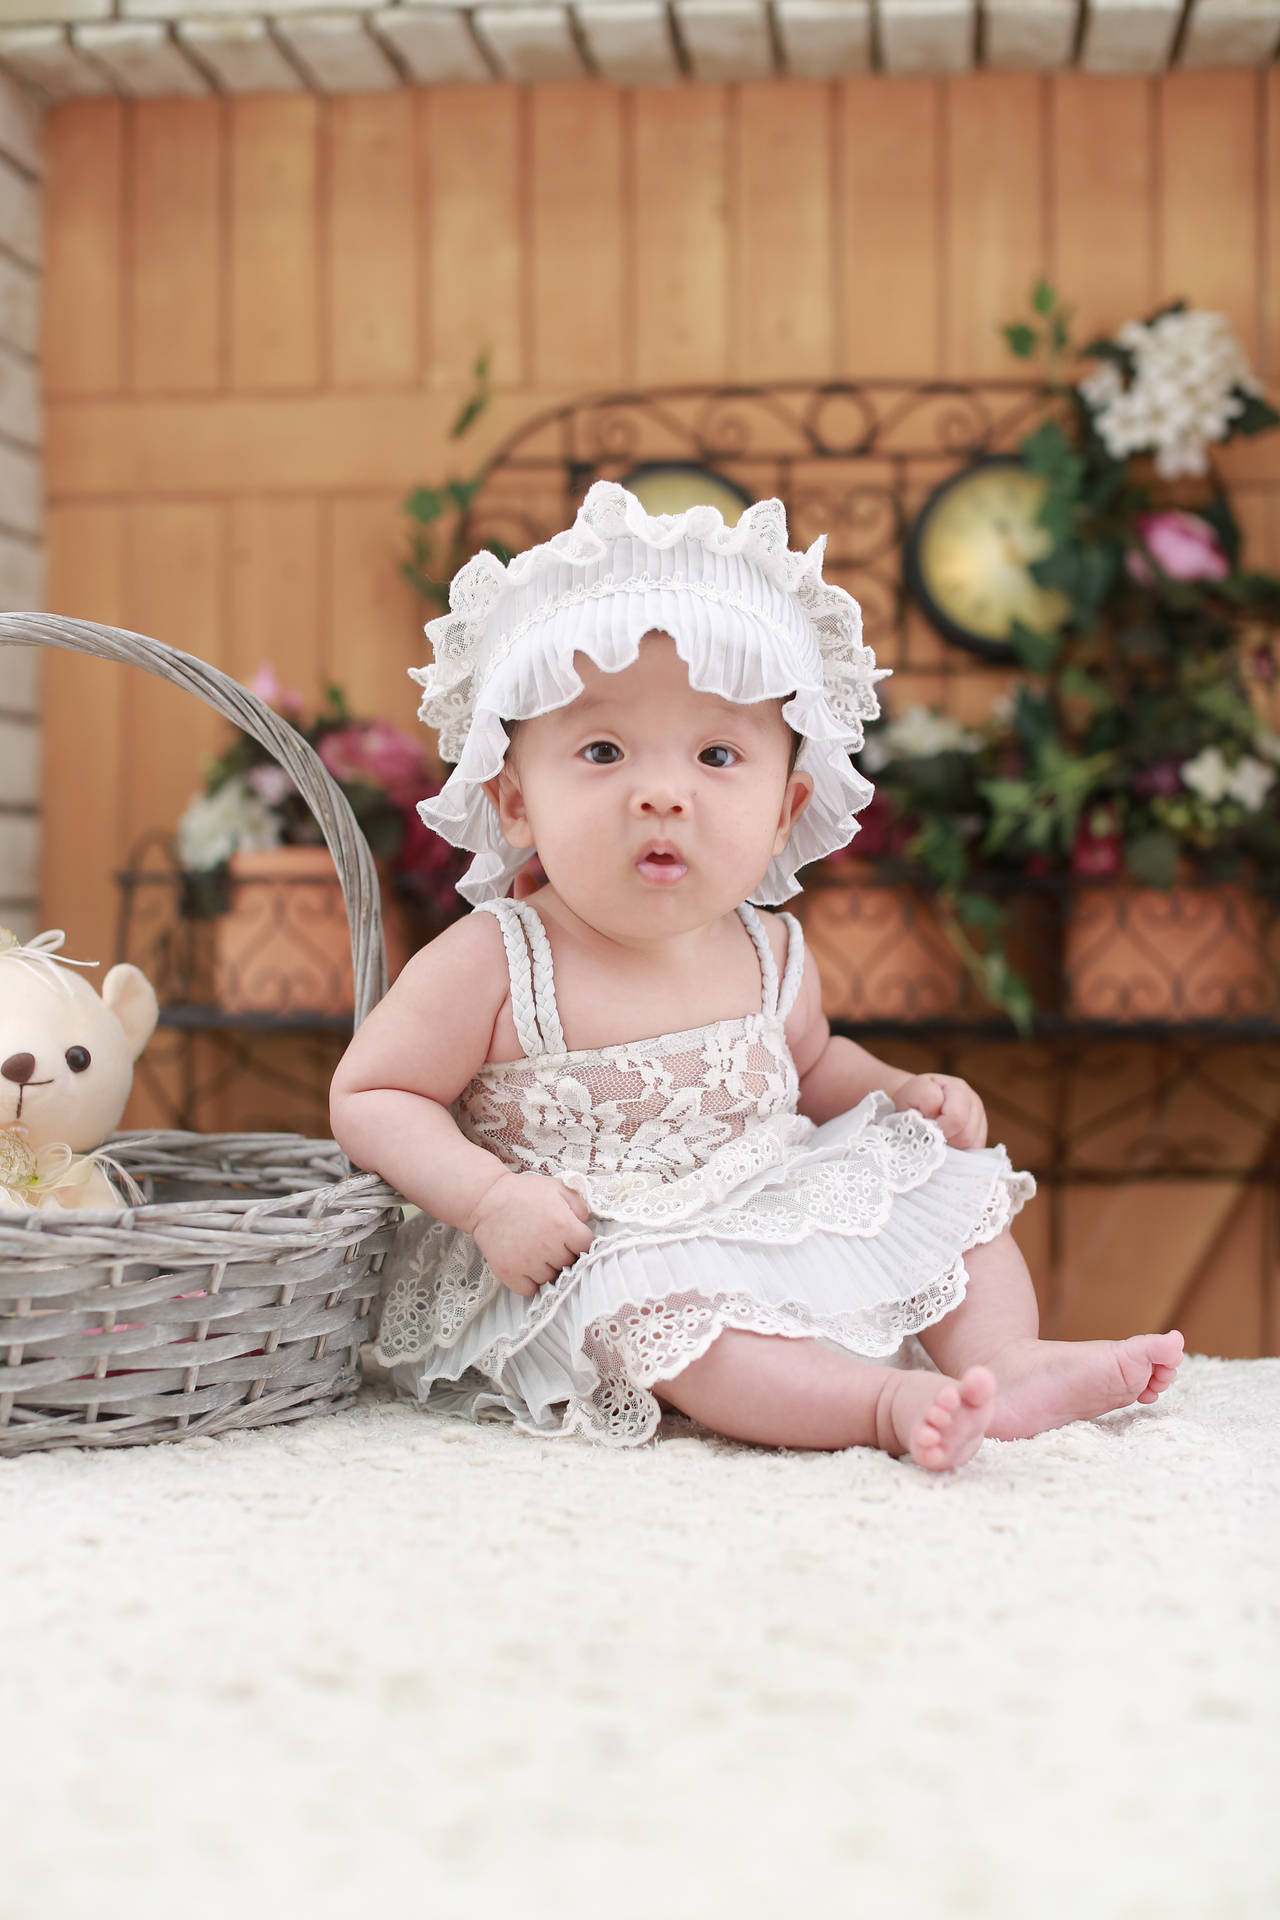 Cute Baby Girl In White Dress